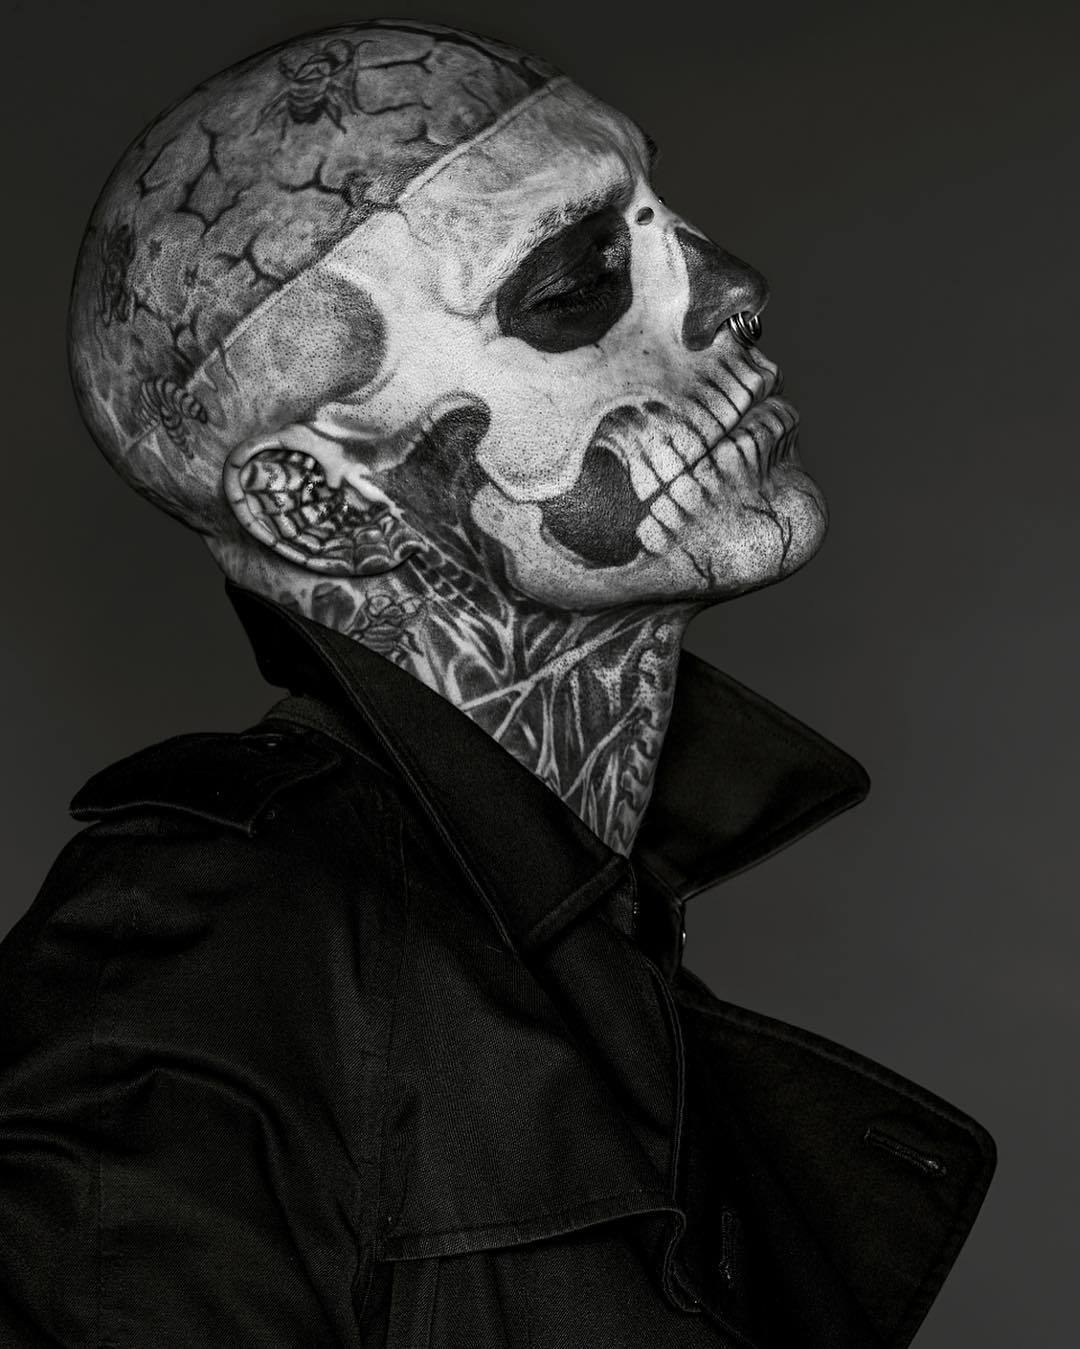 THE ZOMBIE BOY, Photo. Rick genest, Skull tattoos, Zombie